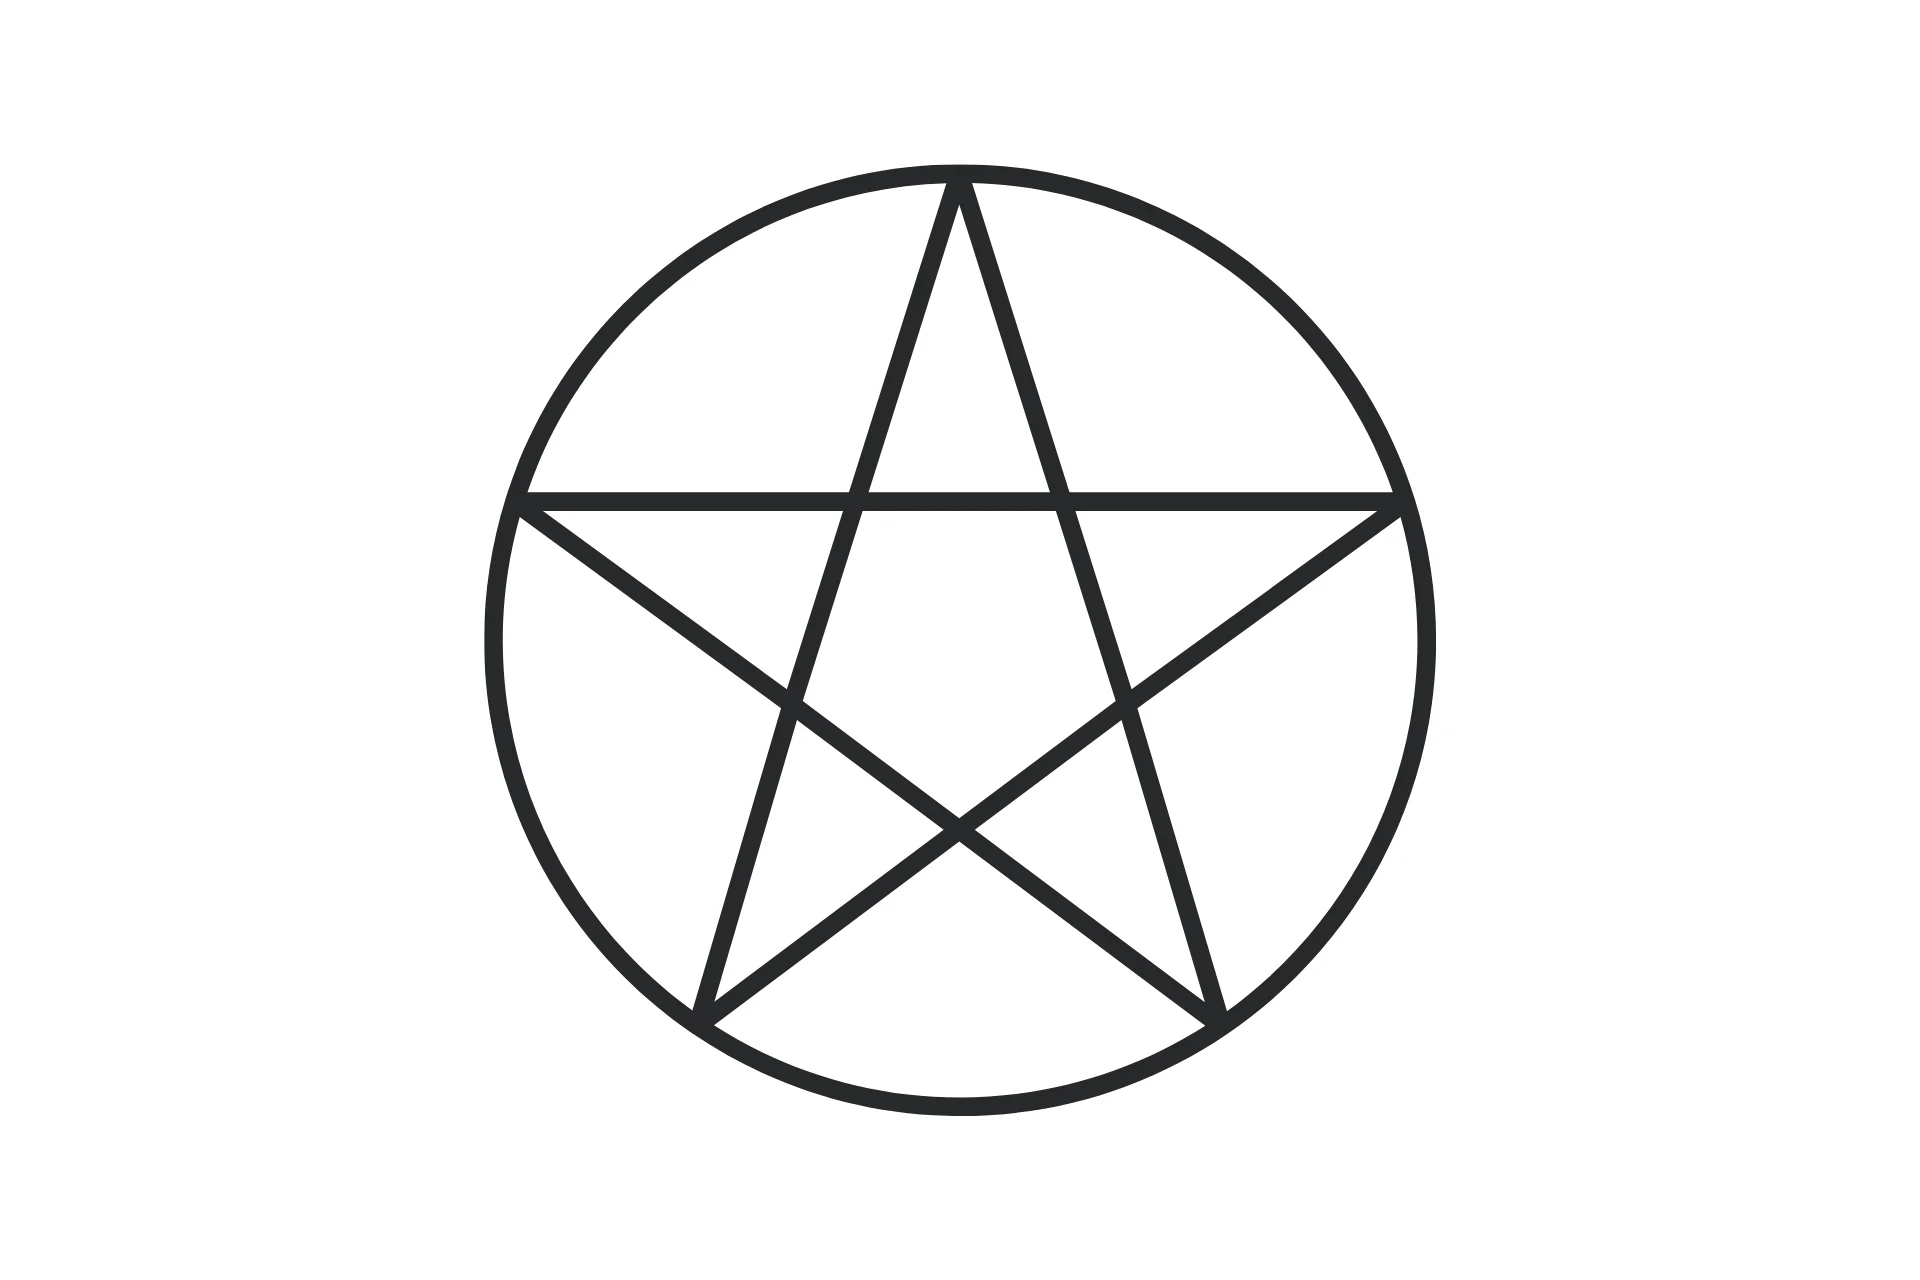 Pentagram spirituális szimbólum